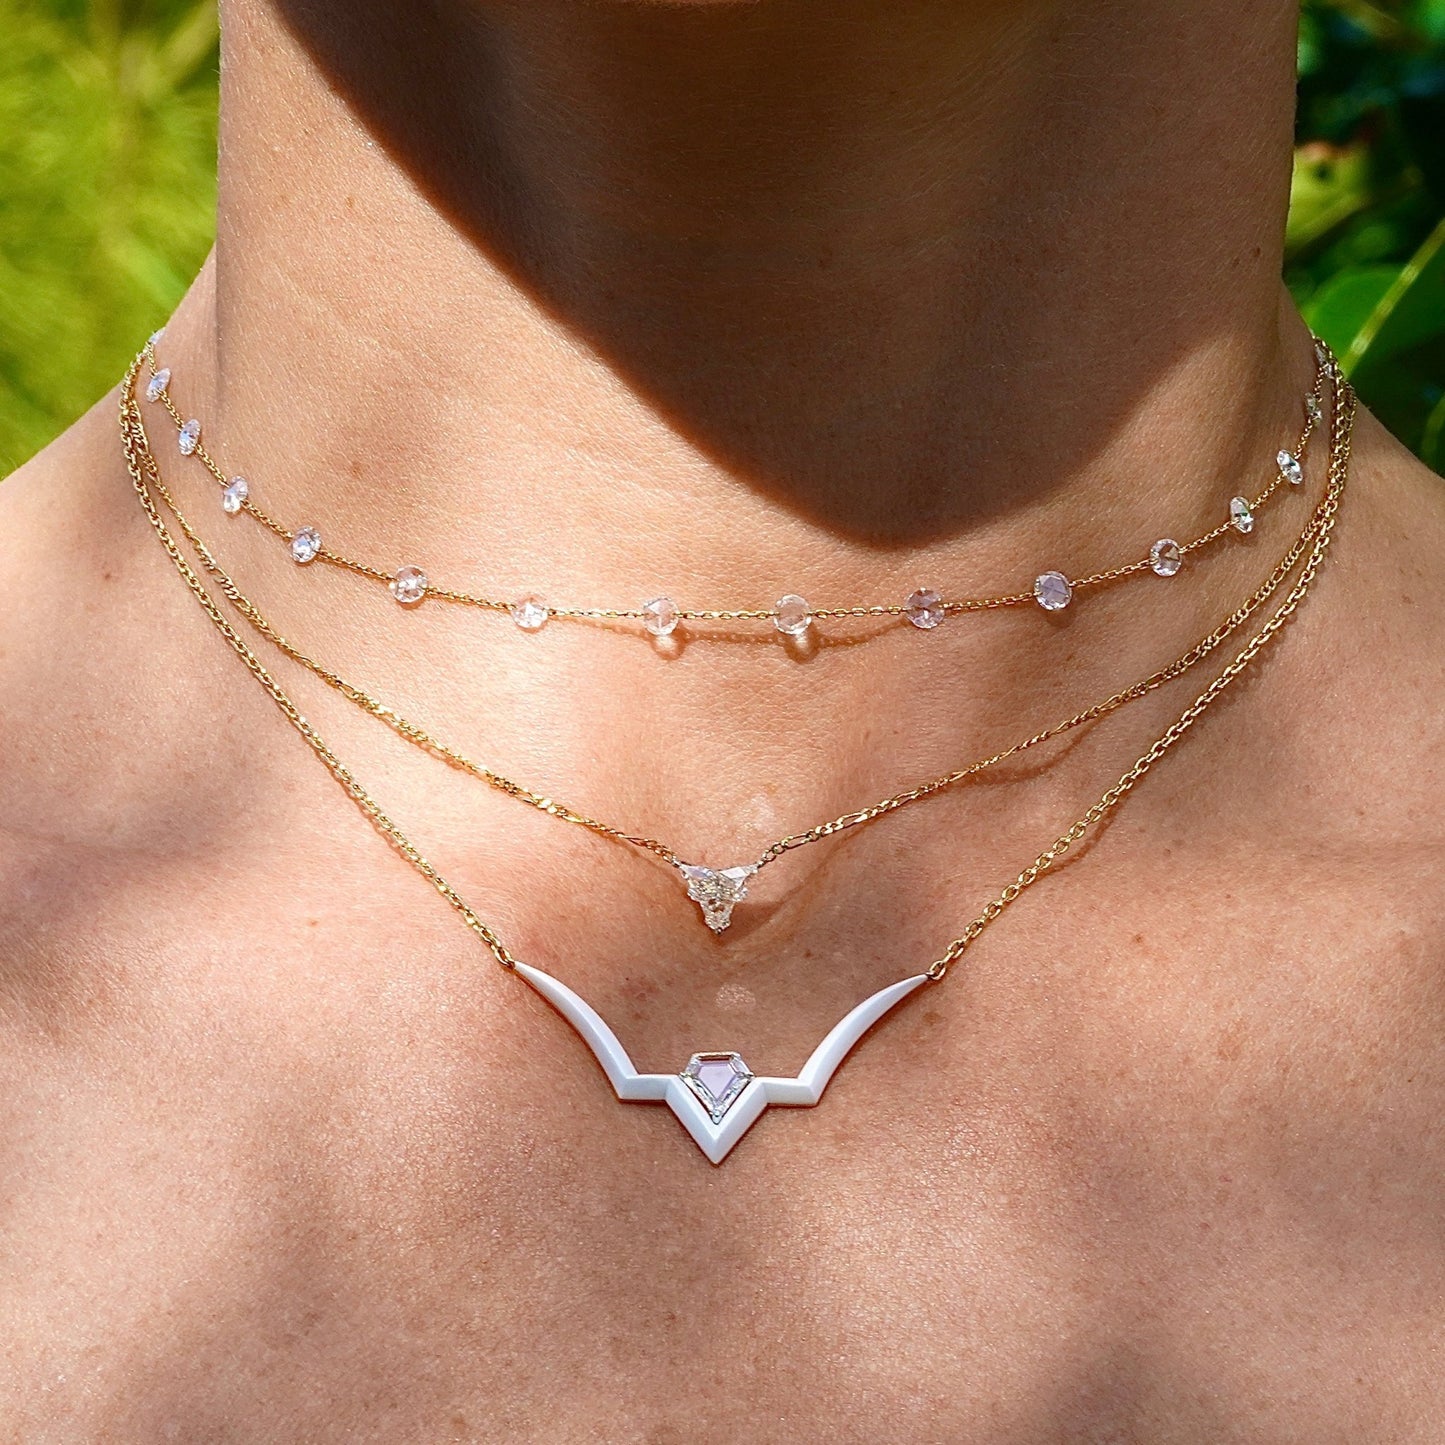 Taura necklace with shield portrait cut diamond - Ines Nieto London